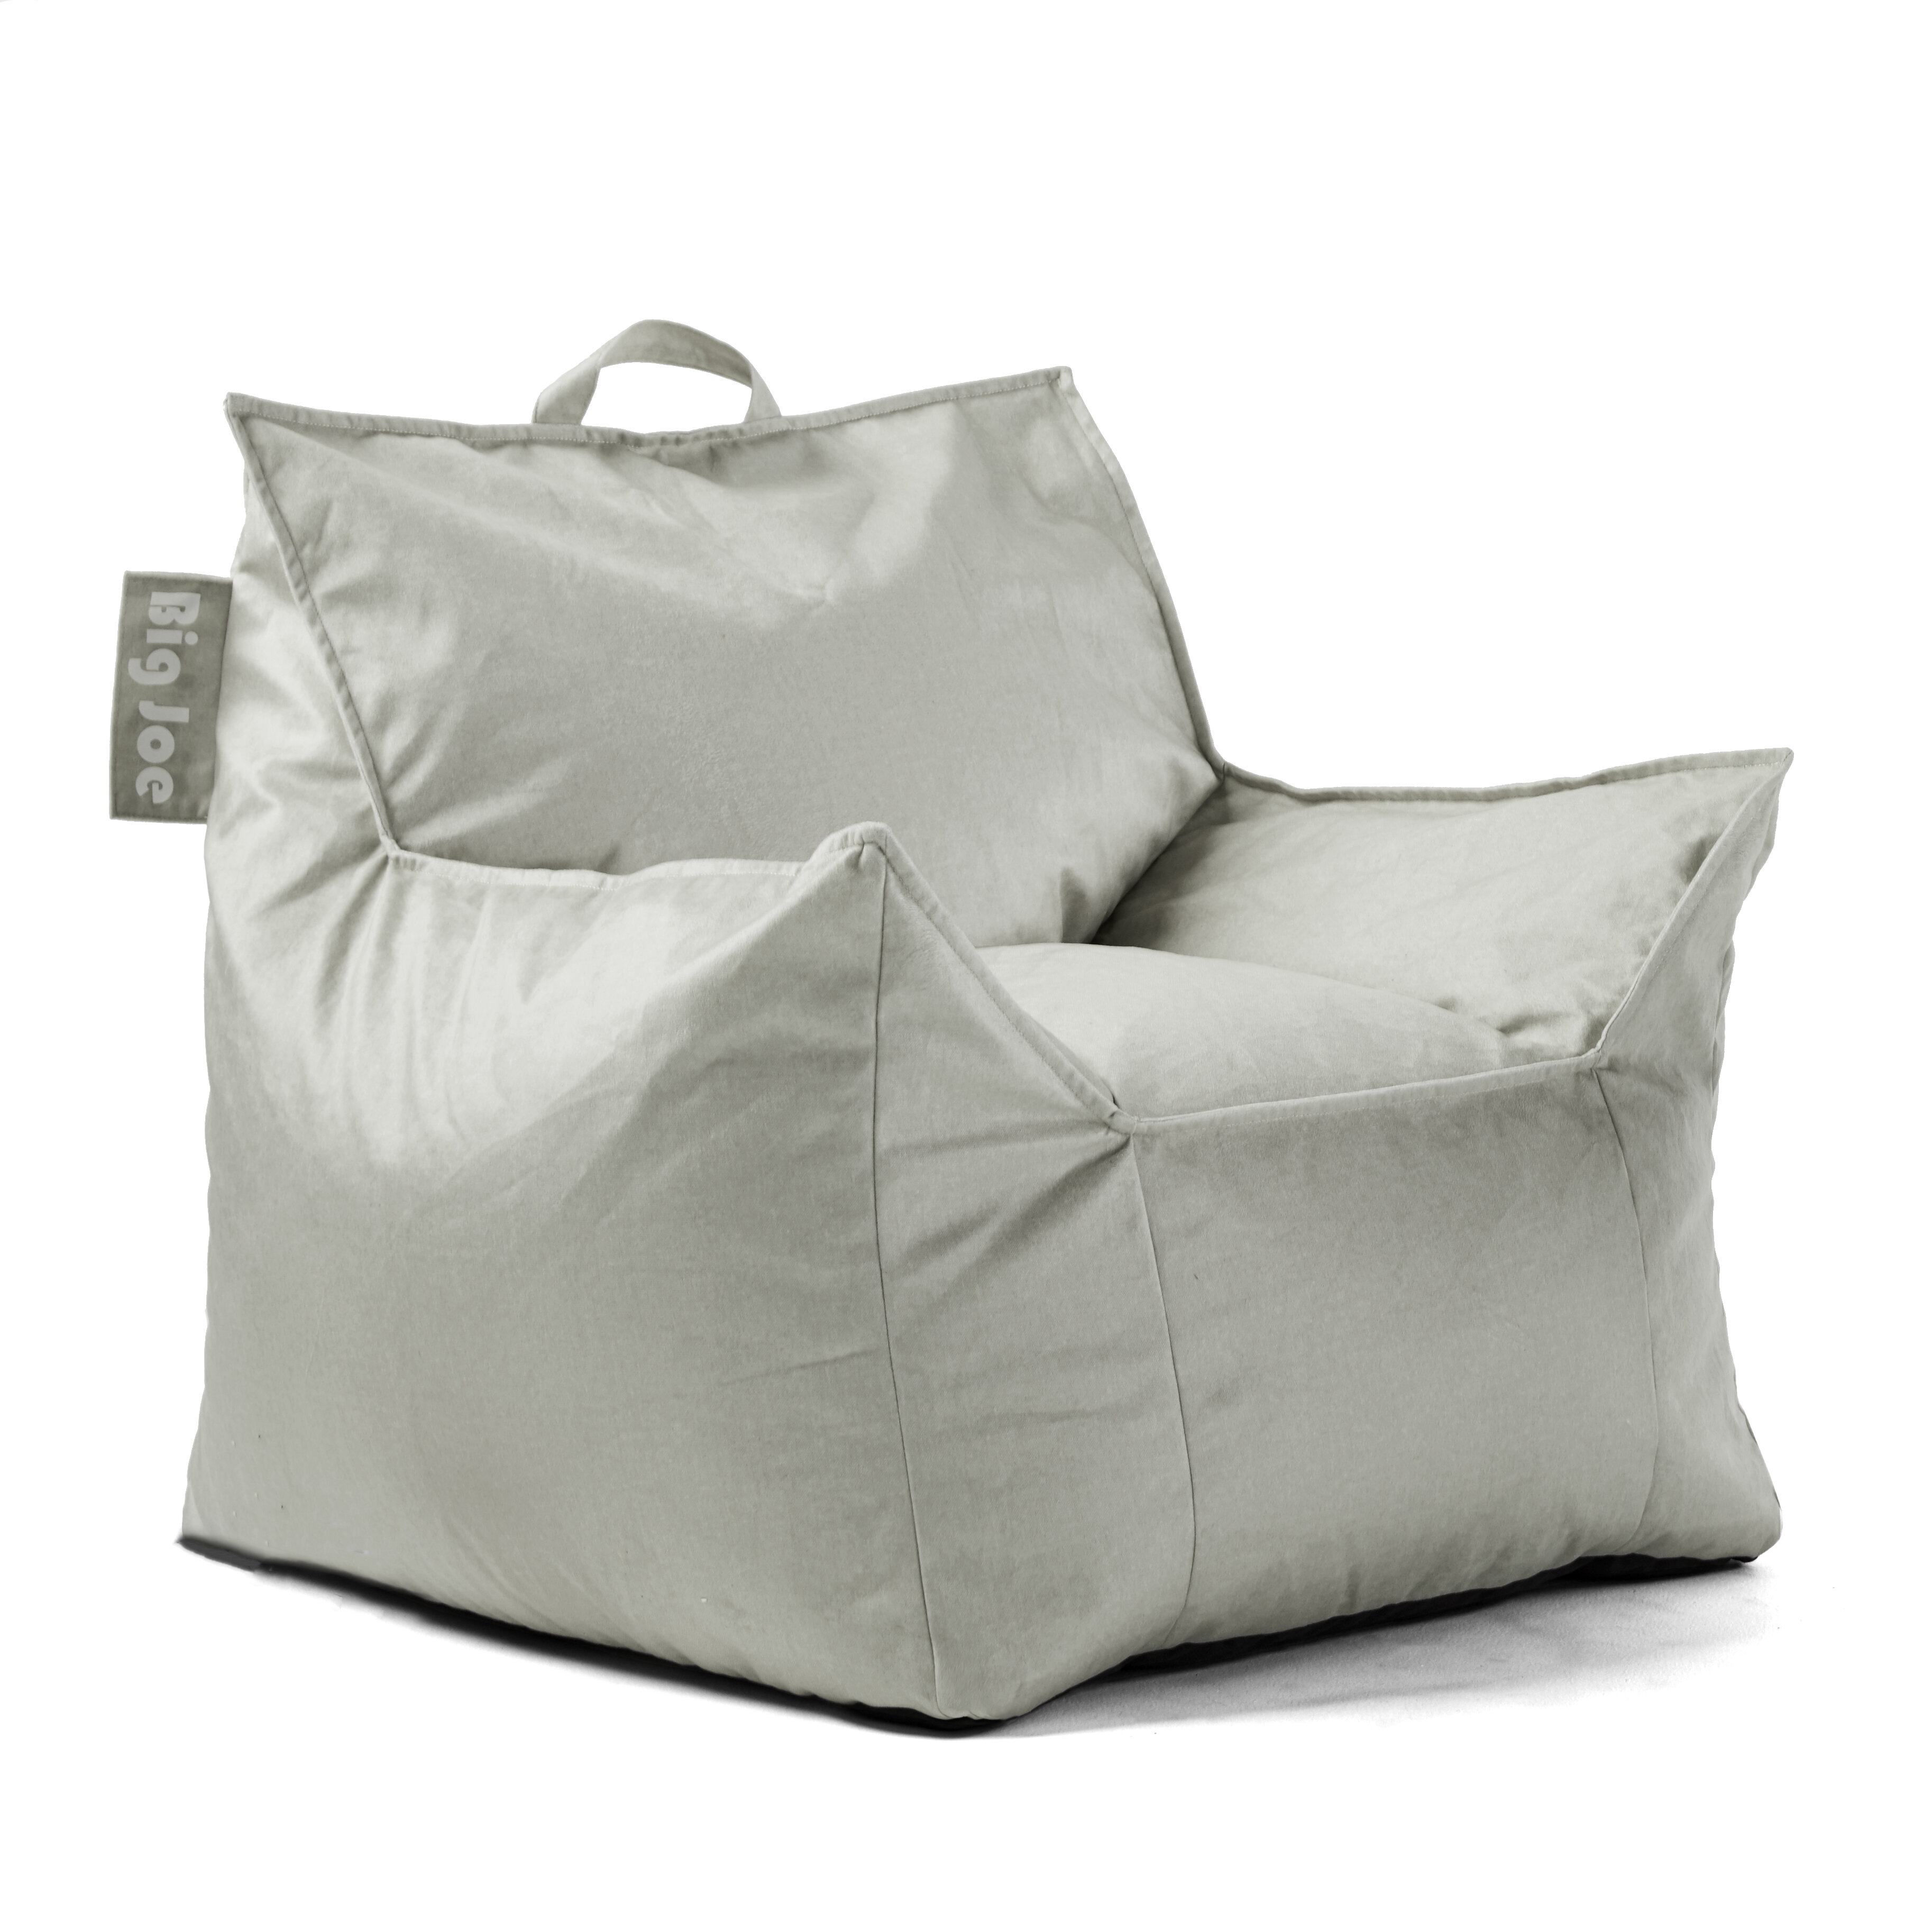 Comfort Research Big Joe Small Bean Bag Chair Lounger Reviews